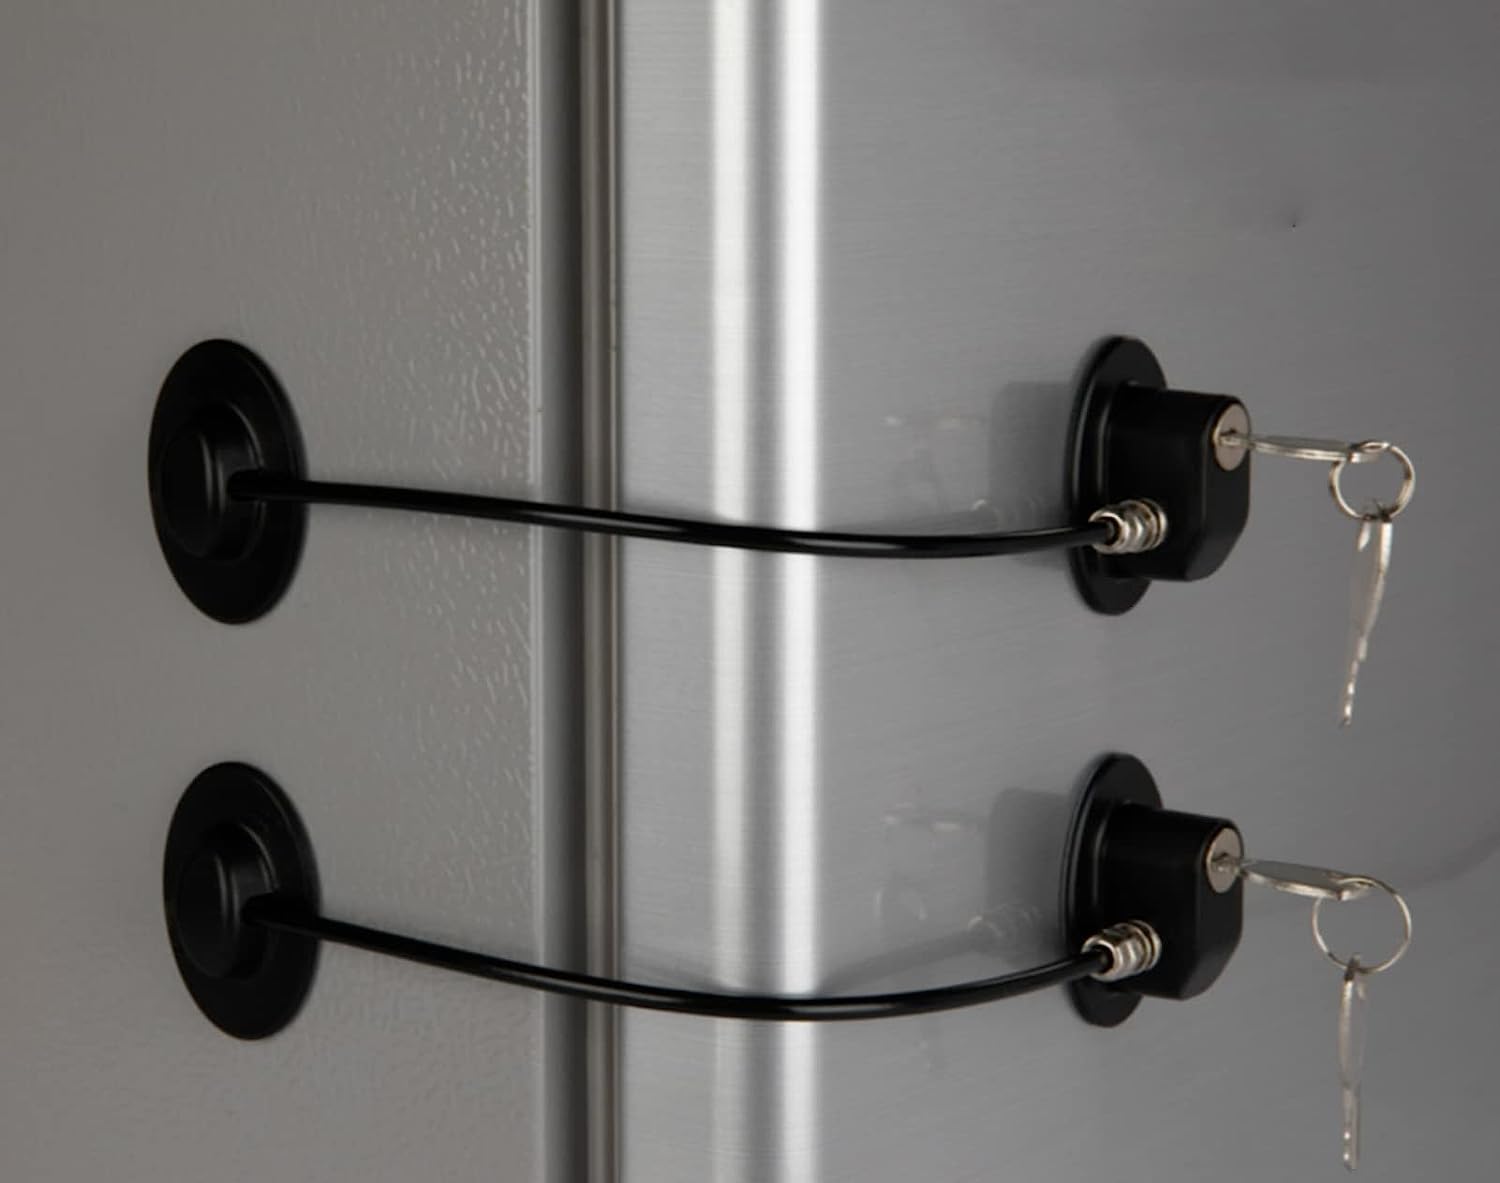 XJunion Refrigerator Door Locks(4-Pack Black),Mini Fridge Lock